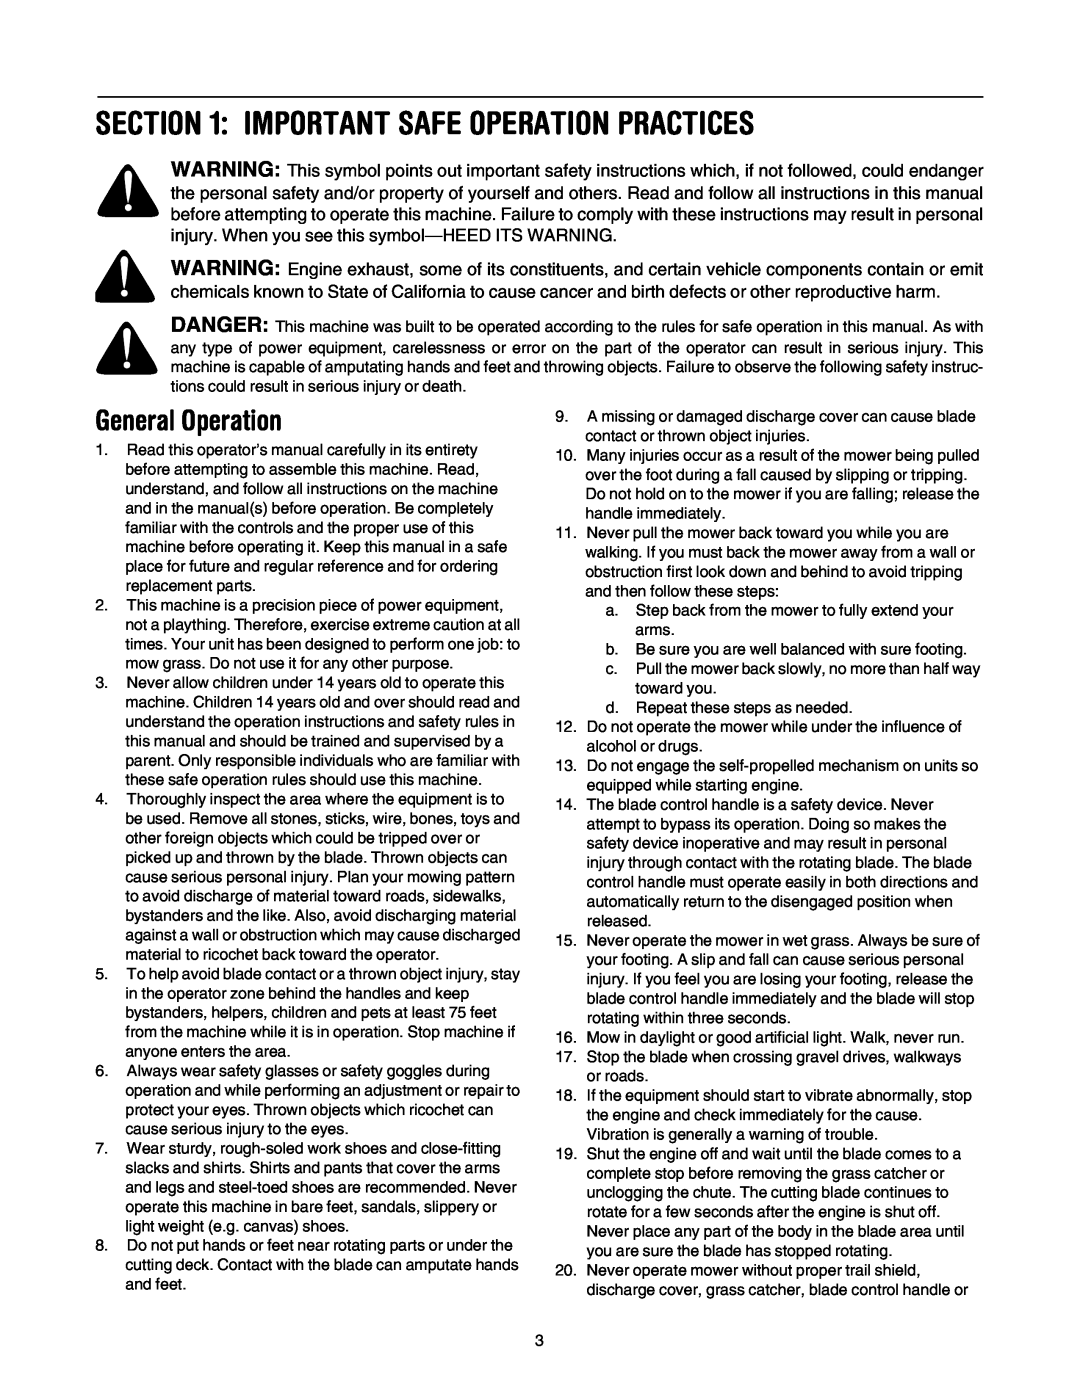 Troy-Bilt 106 manual Important Safe Operation Practices, General Operation 